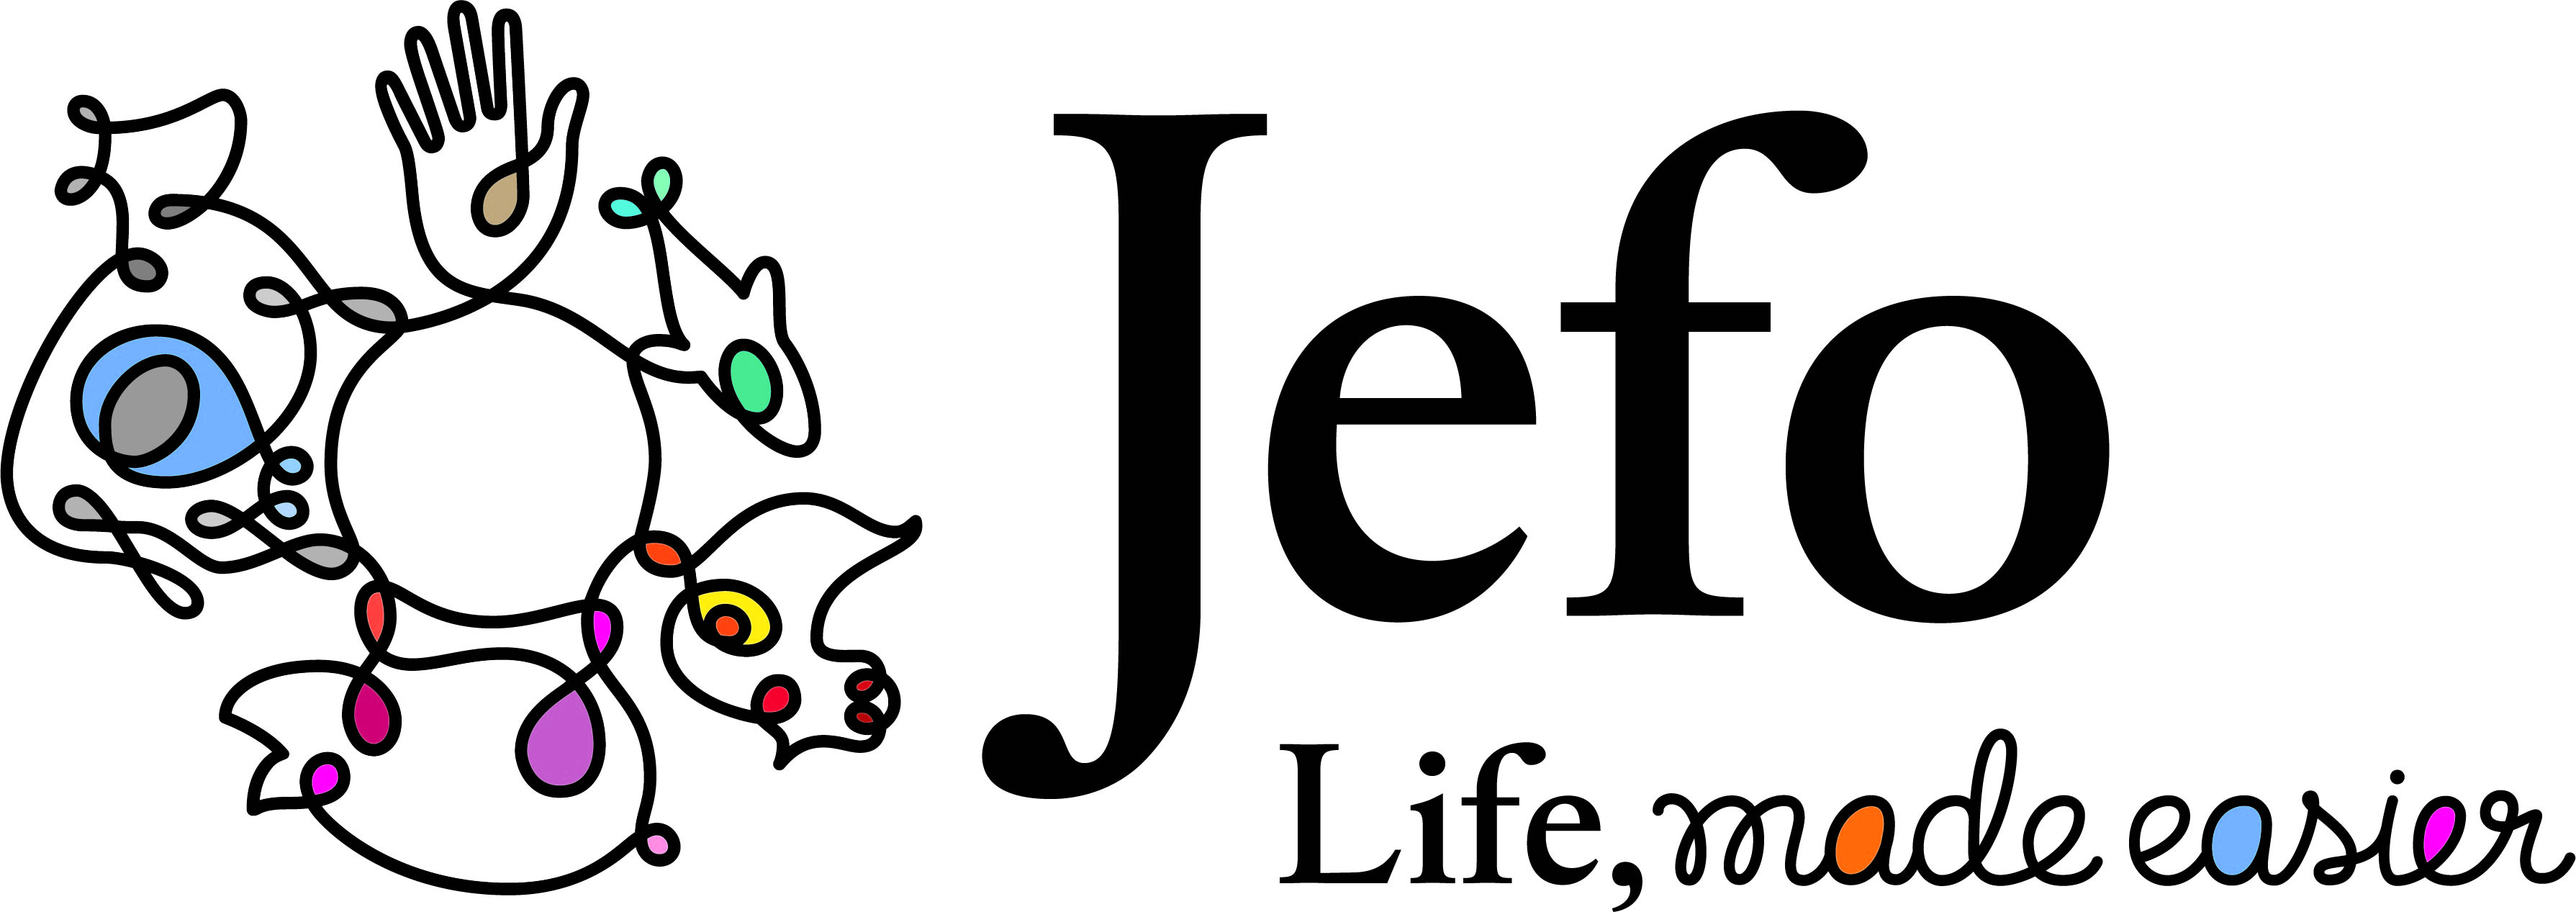 jefo_logo.jpg